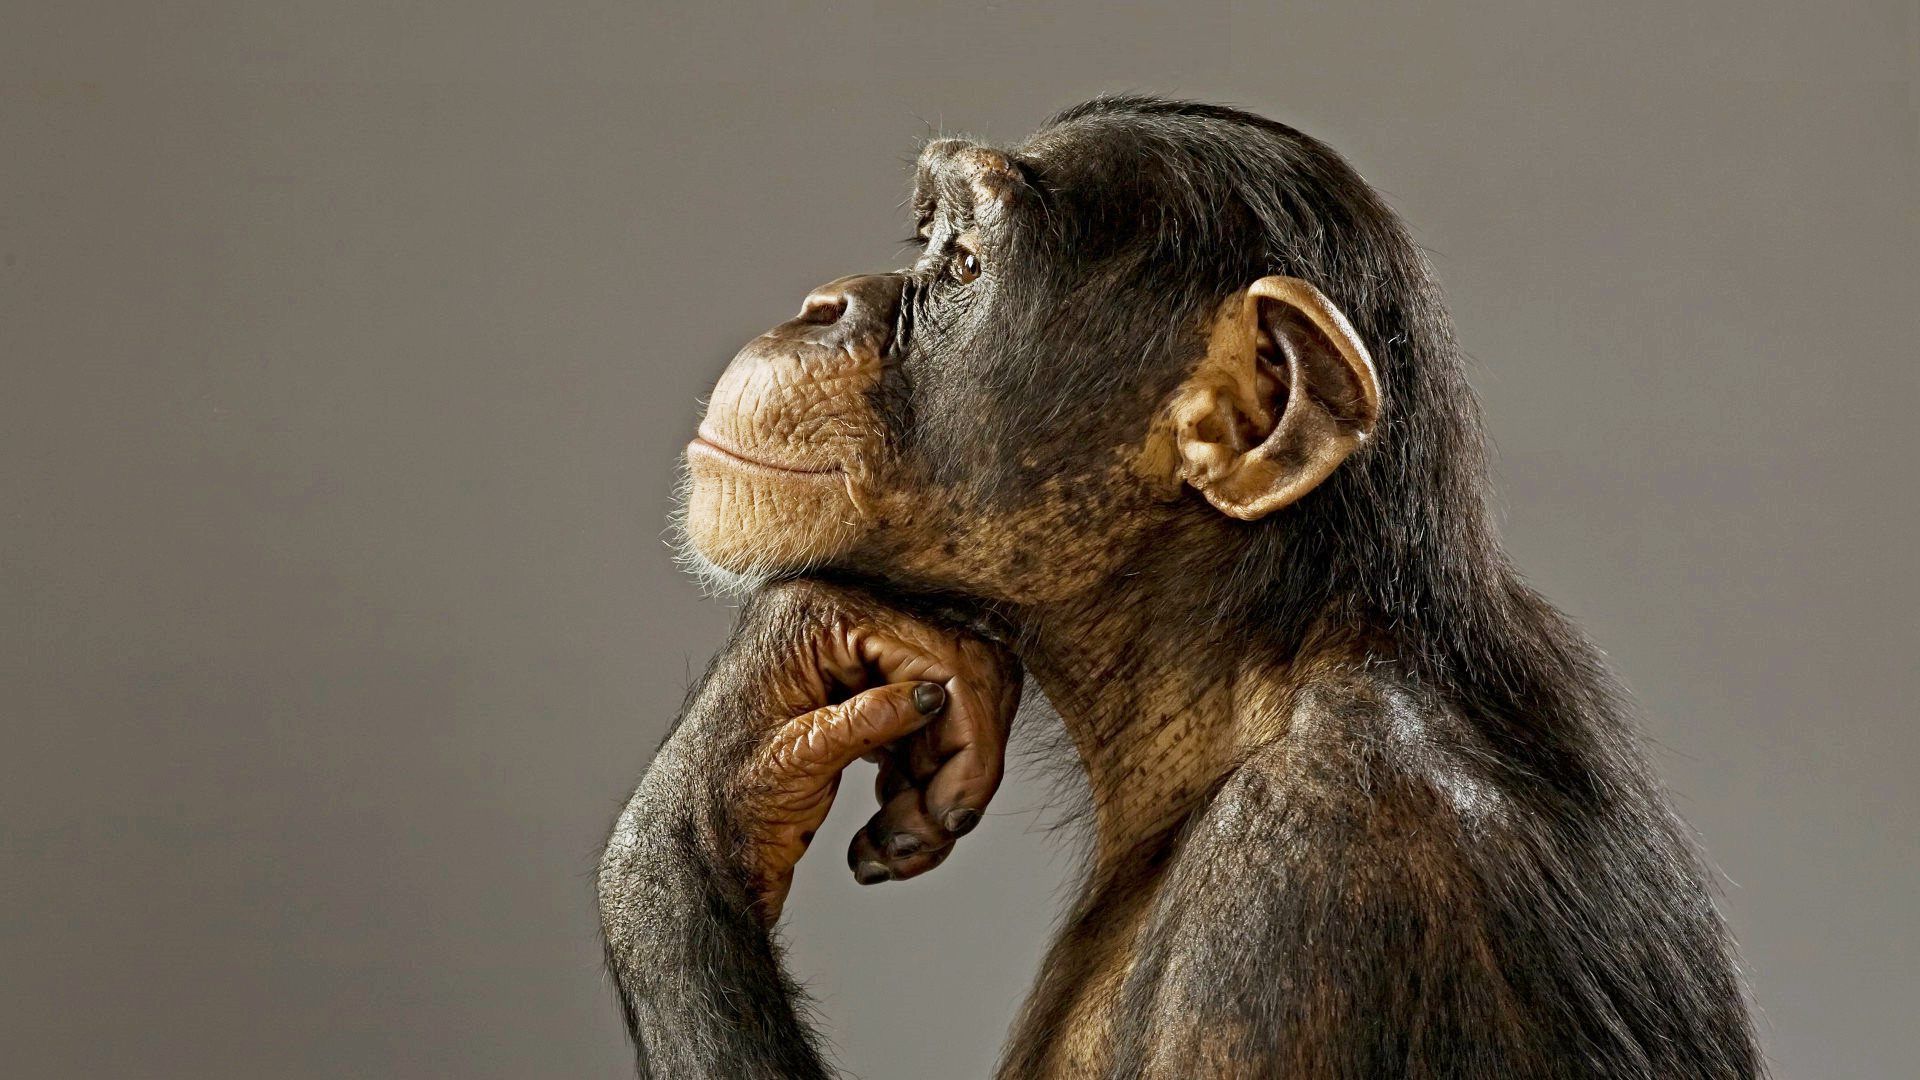 Chimpanzee Wallpaper And Background Image